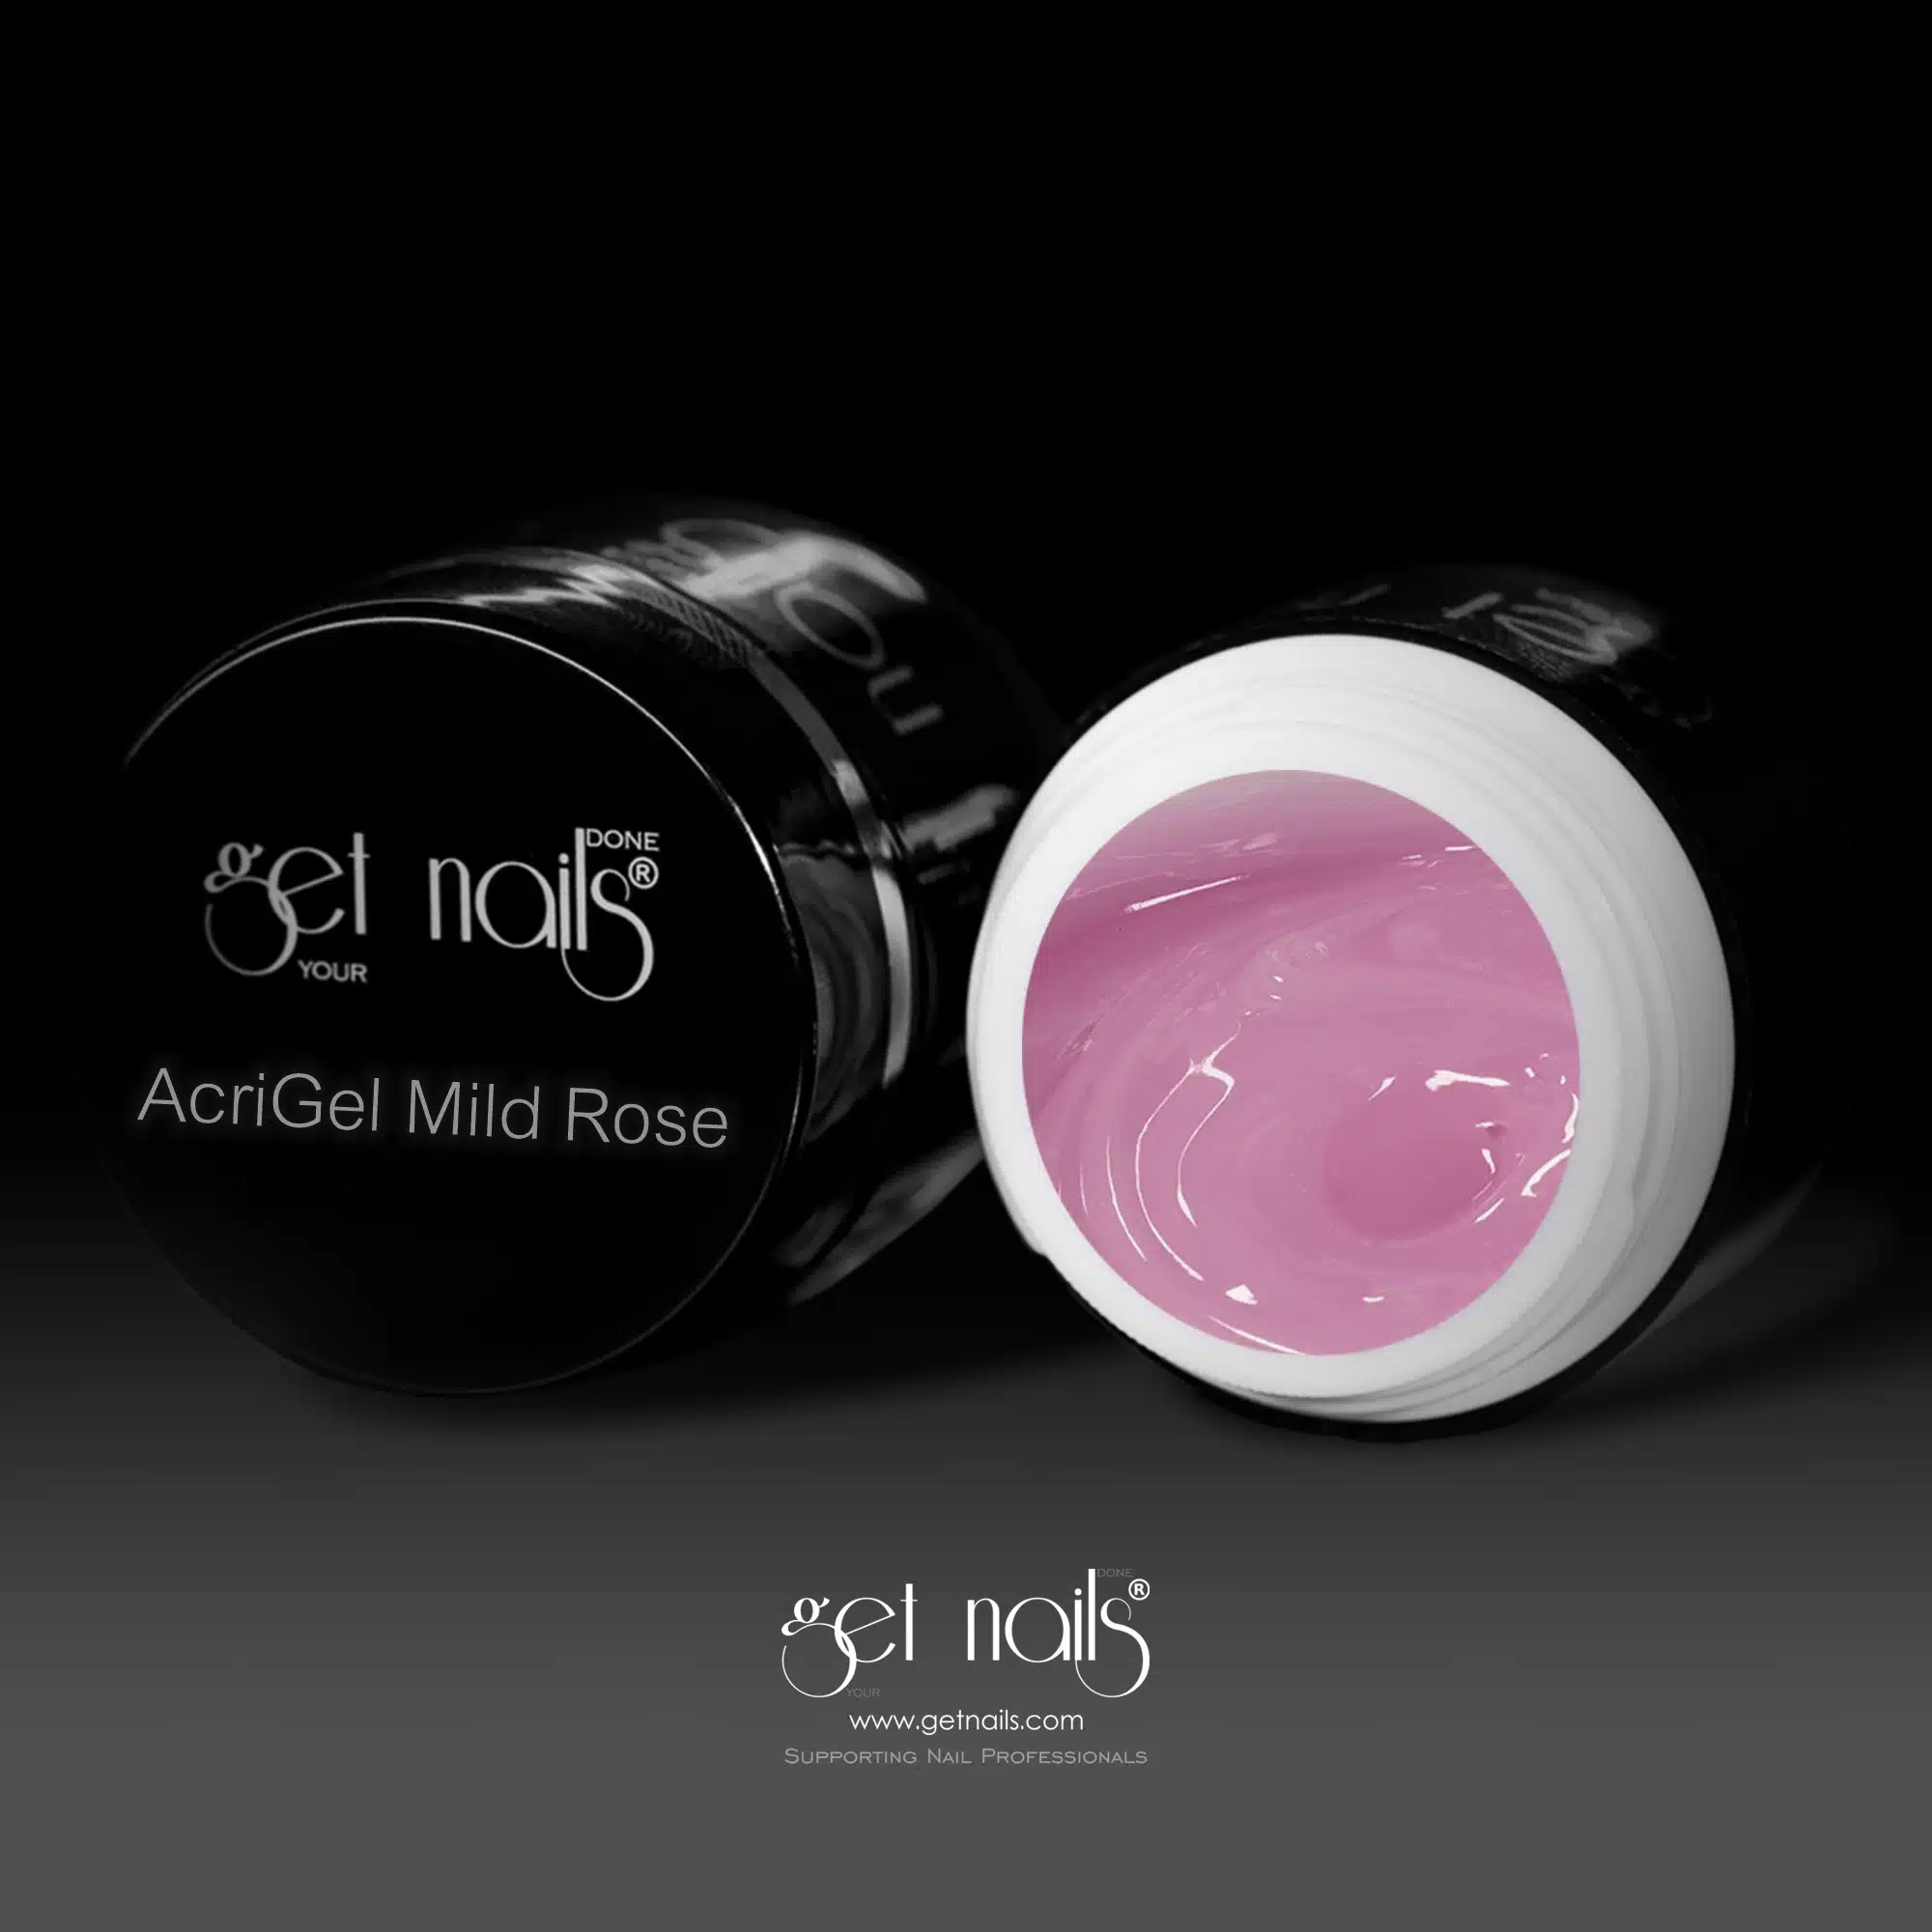 Get Nails Austria - AcriGel Mild Rose Sample